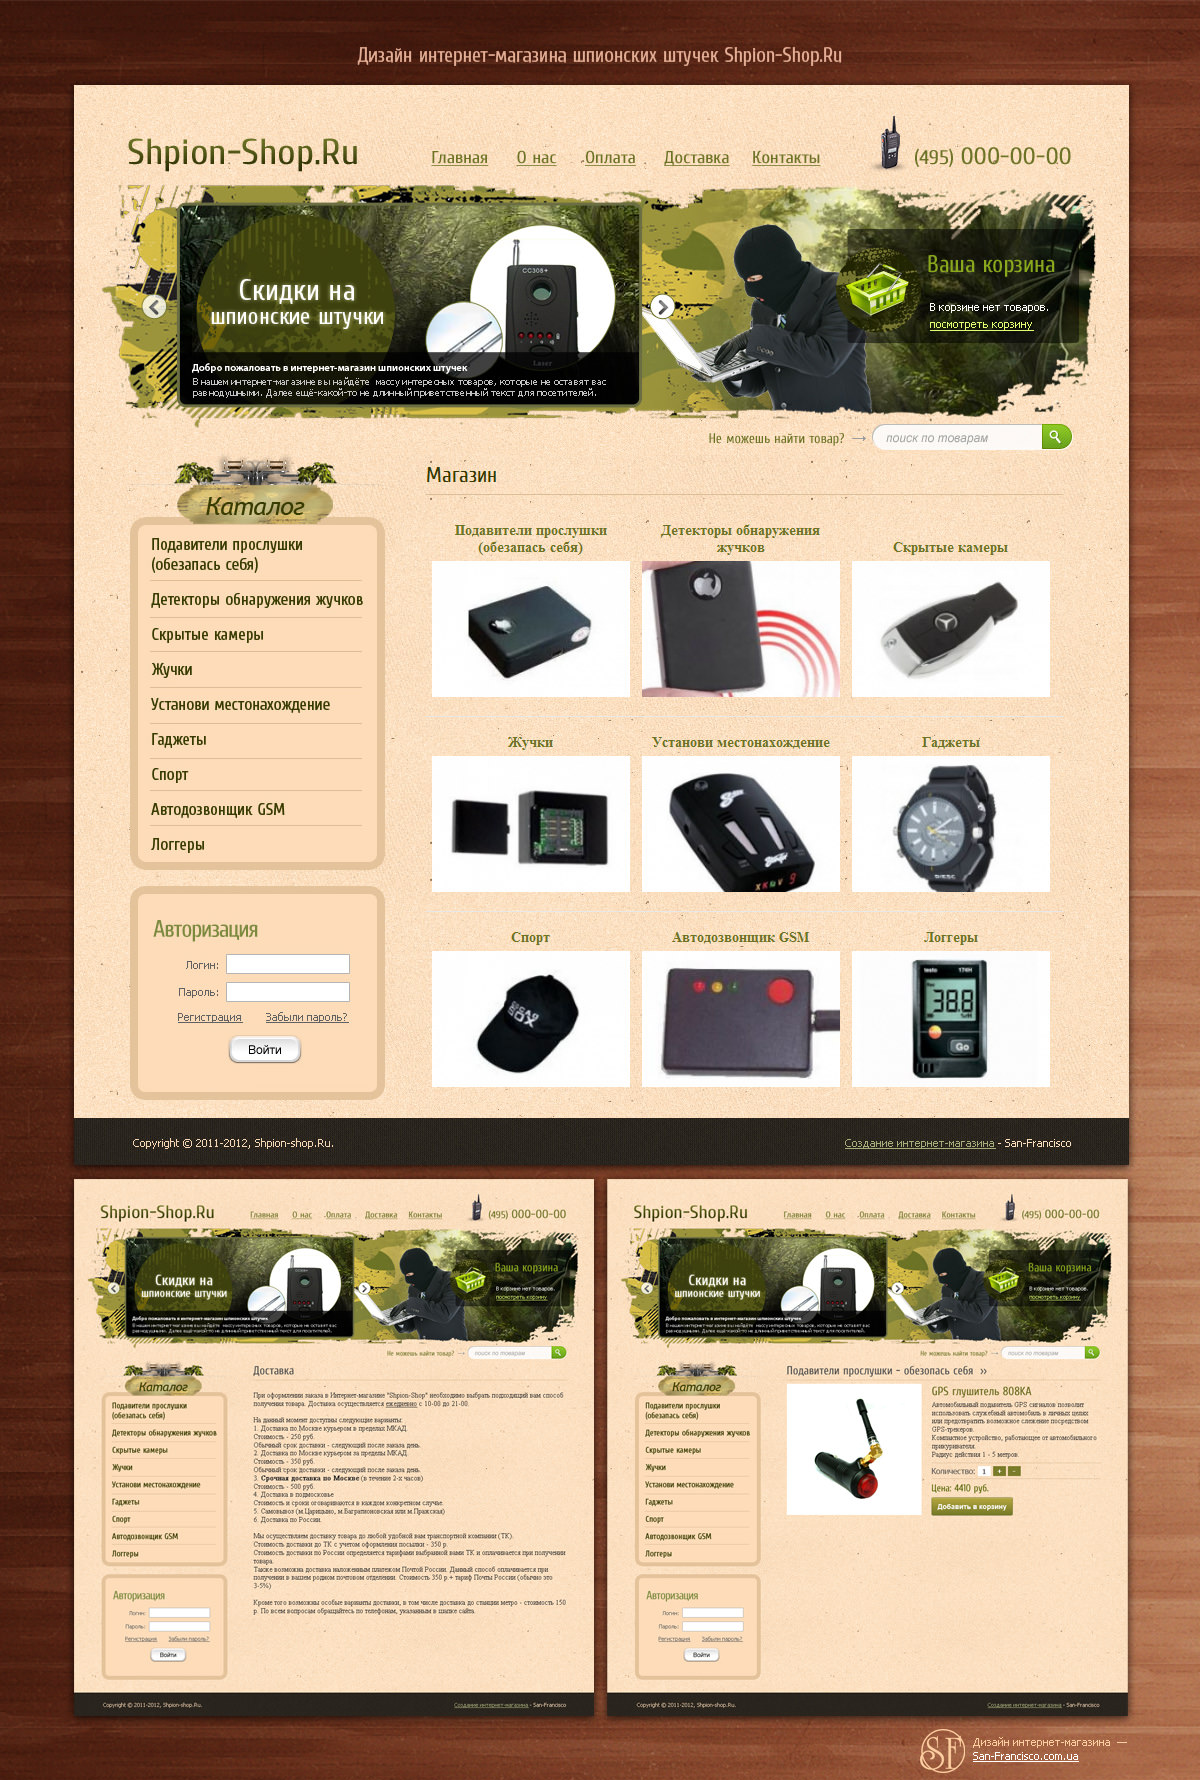 Дизайн интернет-магазина ShpionShop